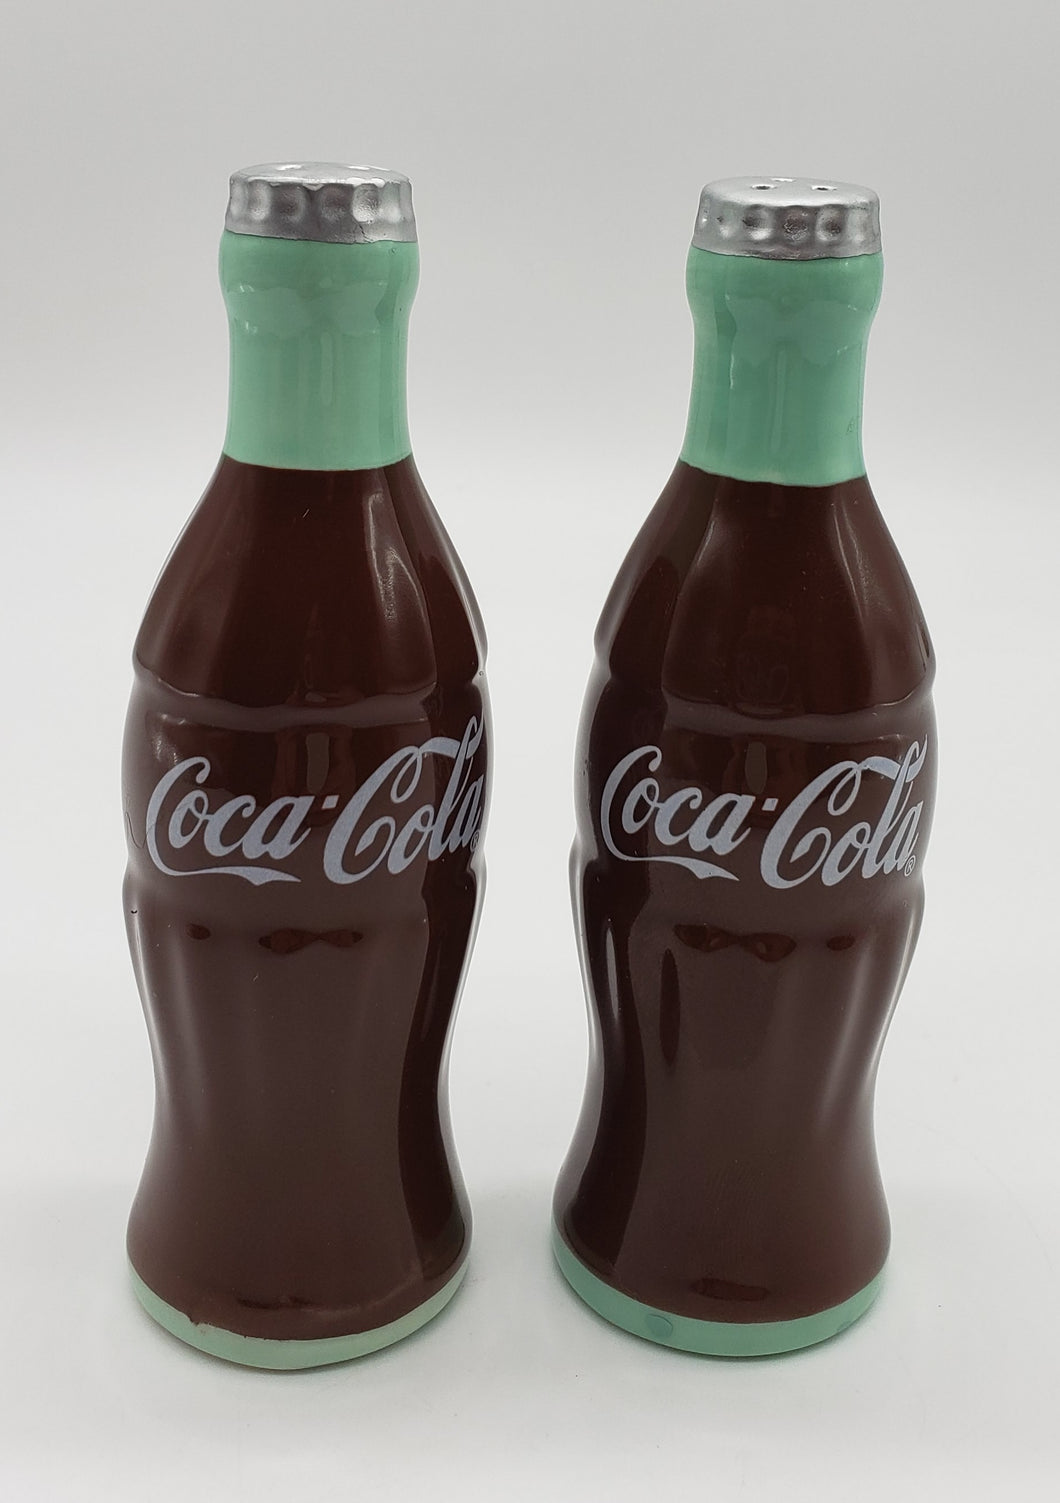 Coca Cola Salt and Pepper Shakers